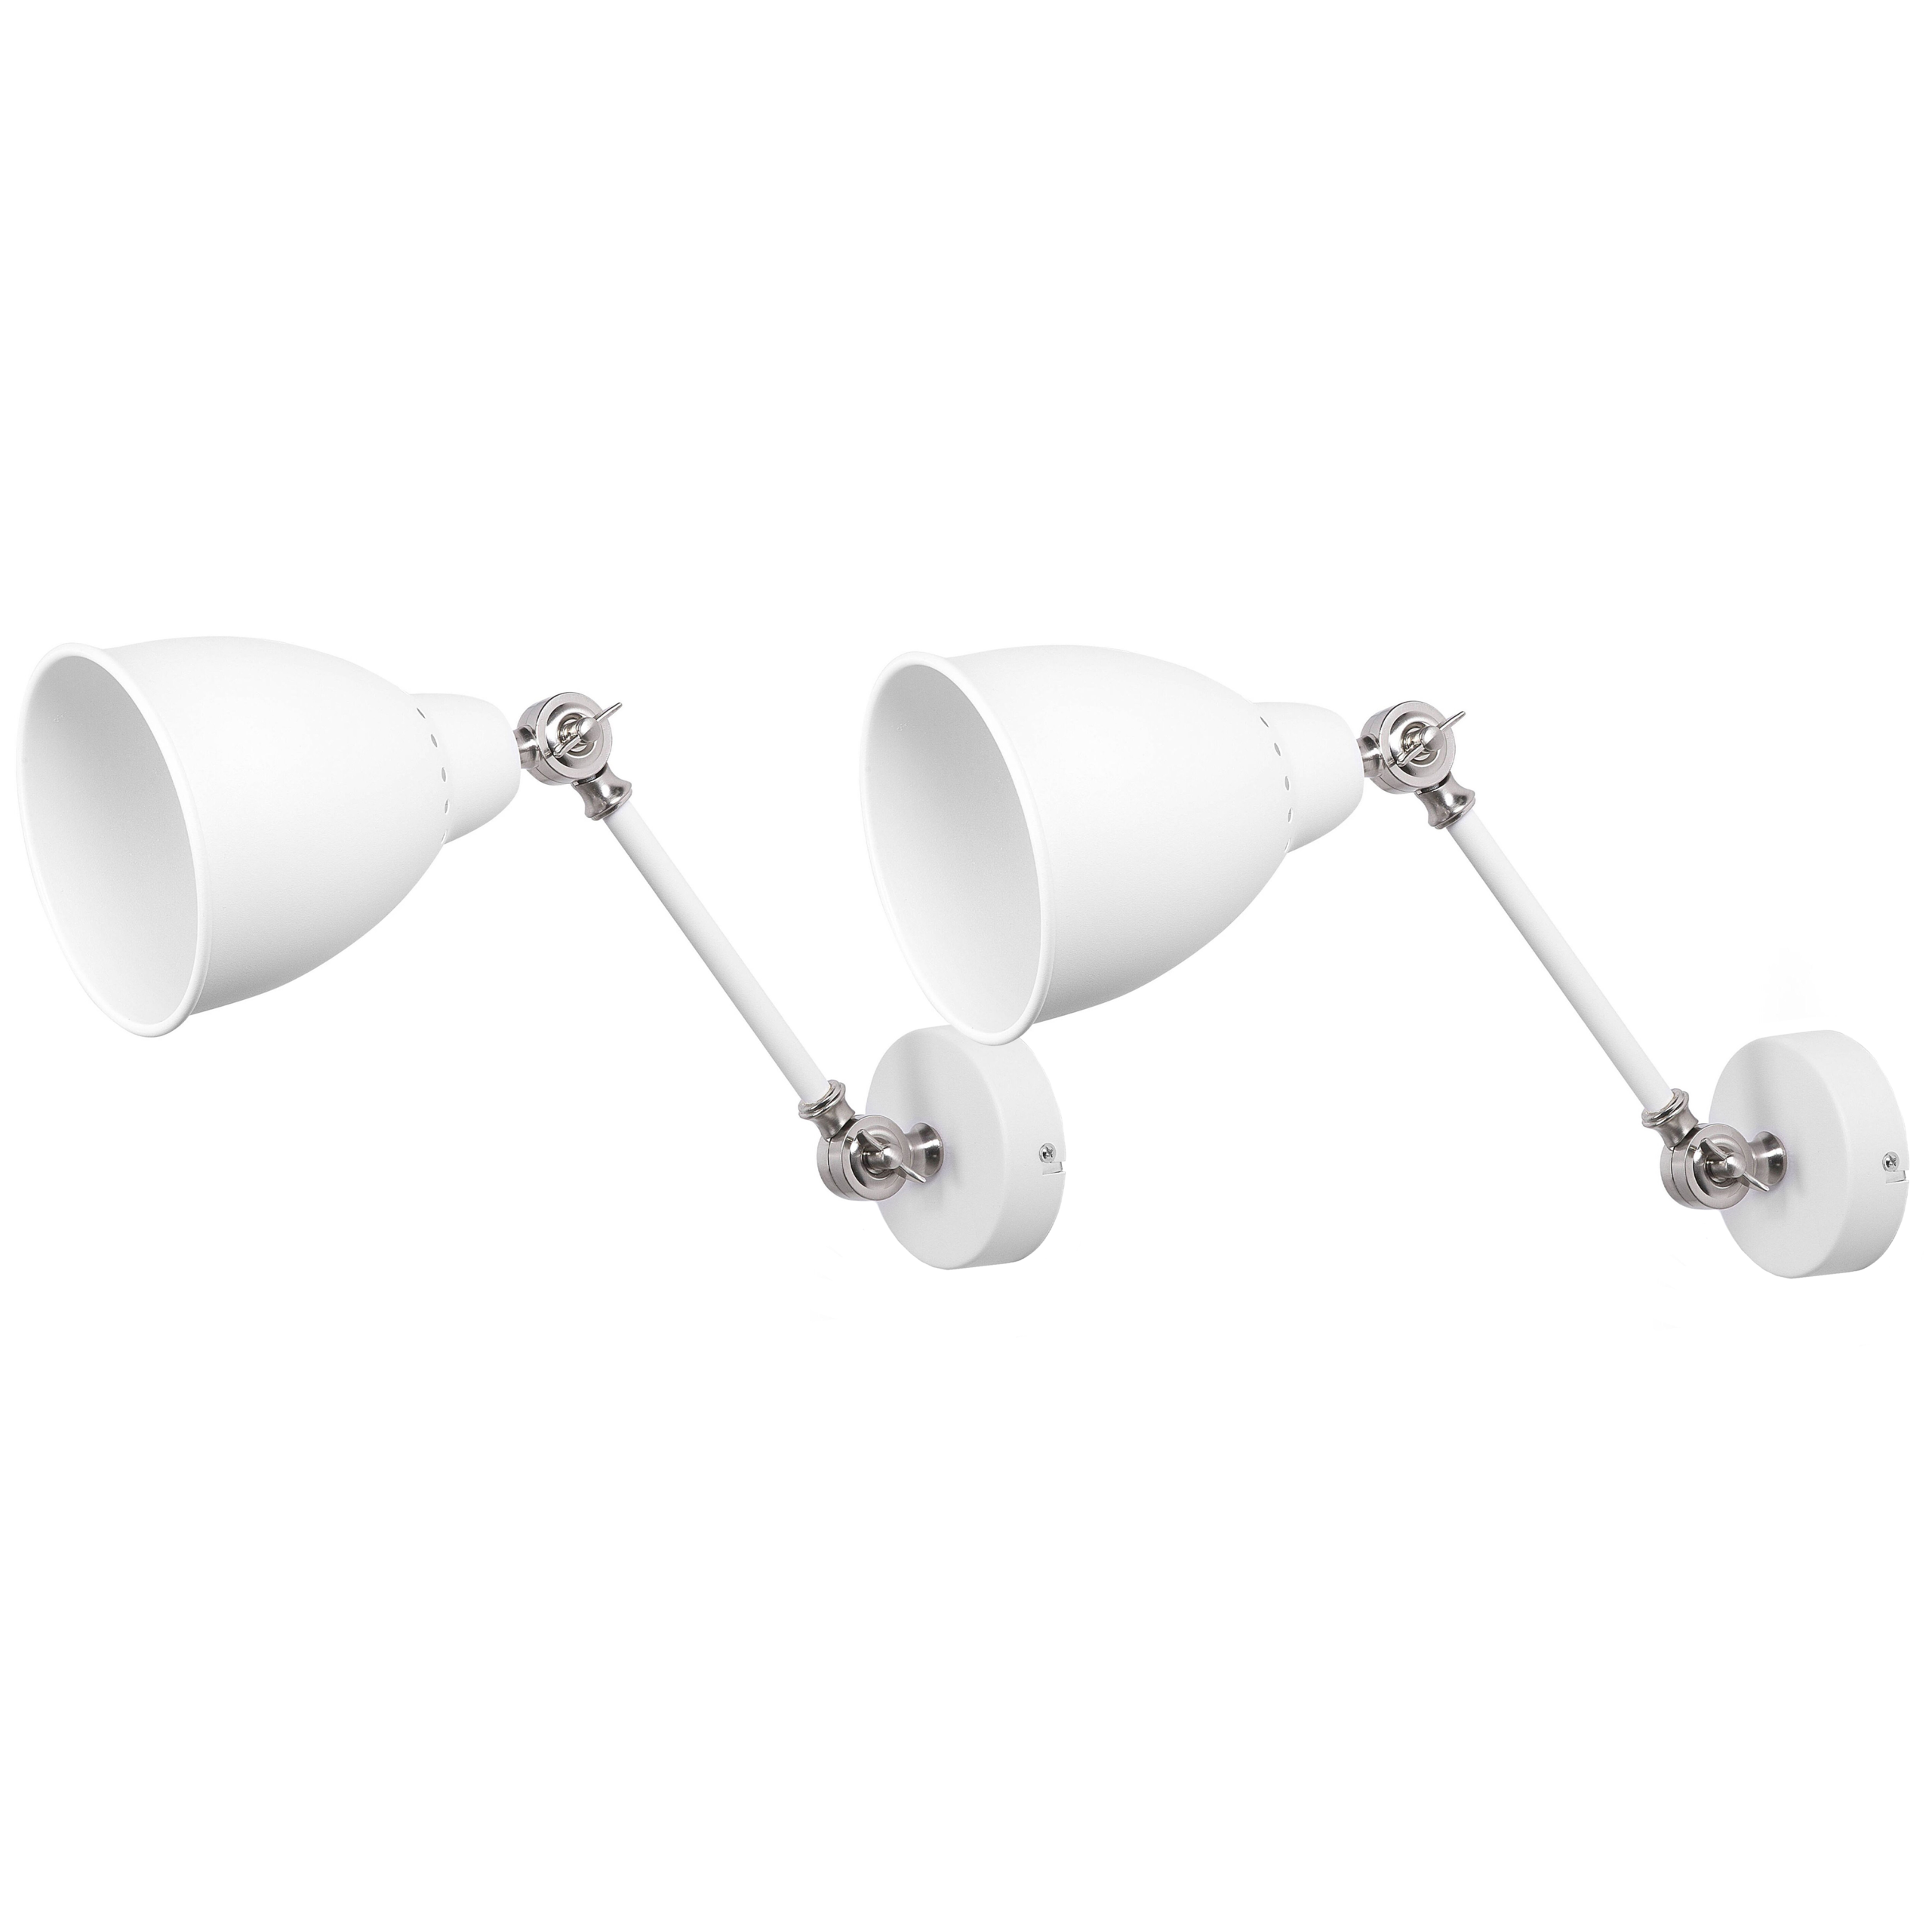 Beliani 2 Wall Lamps Set White Metal Adjustable Light Position Swing Arm Modern